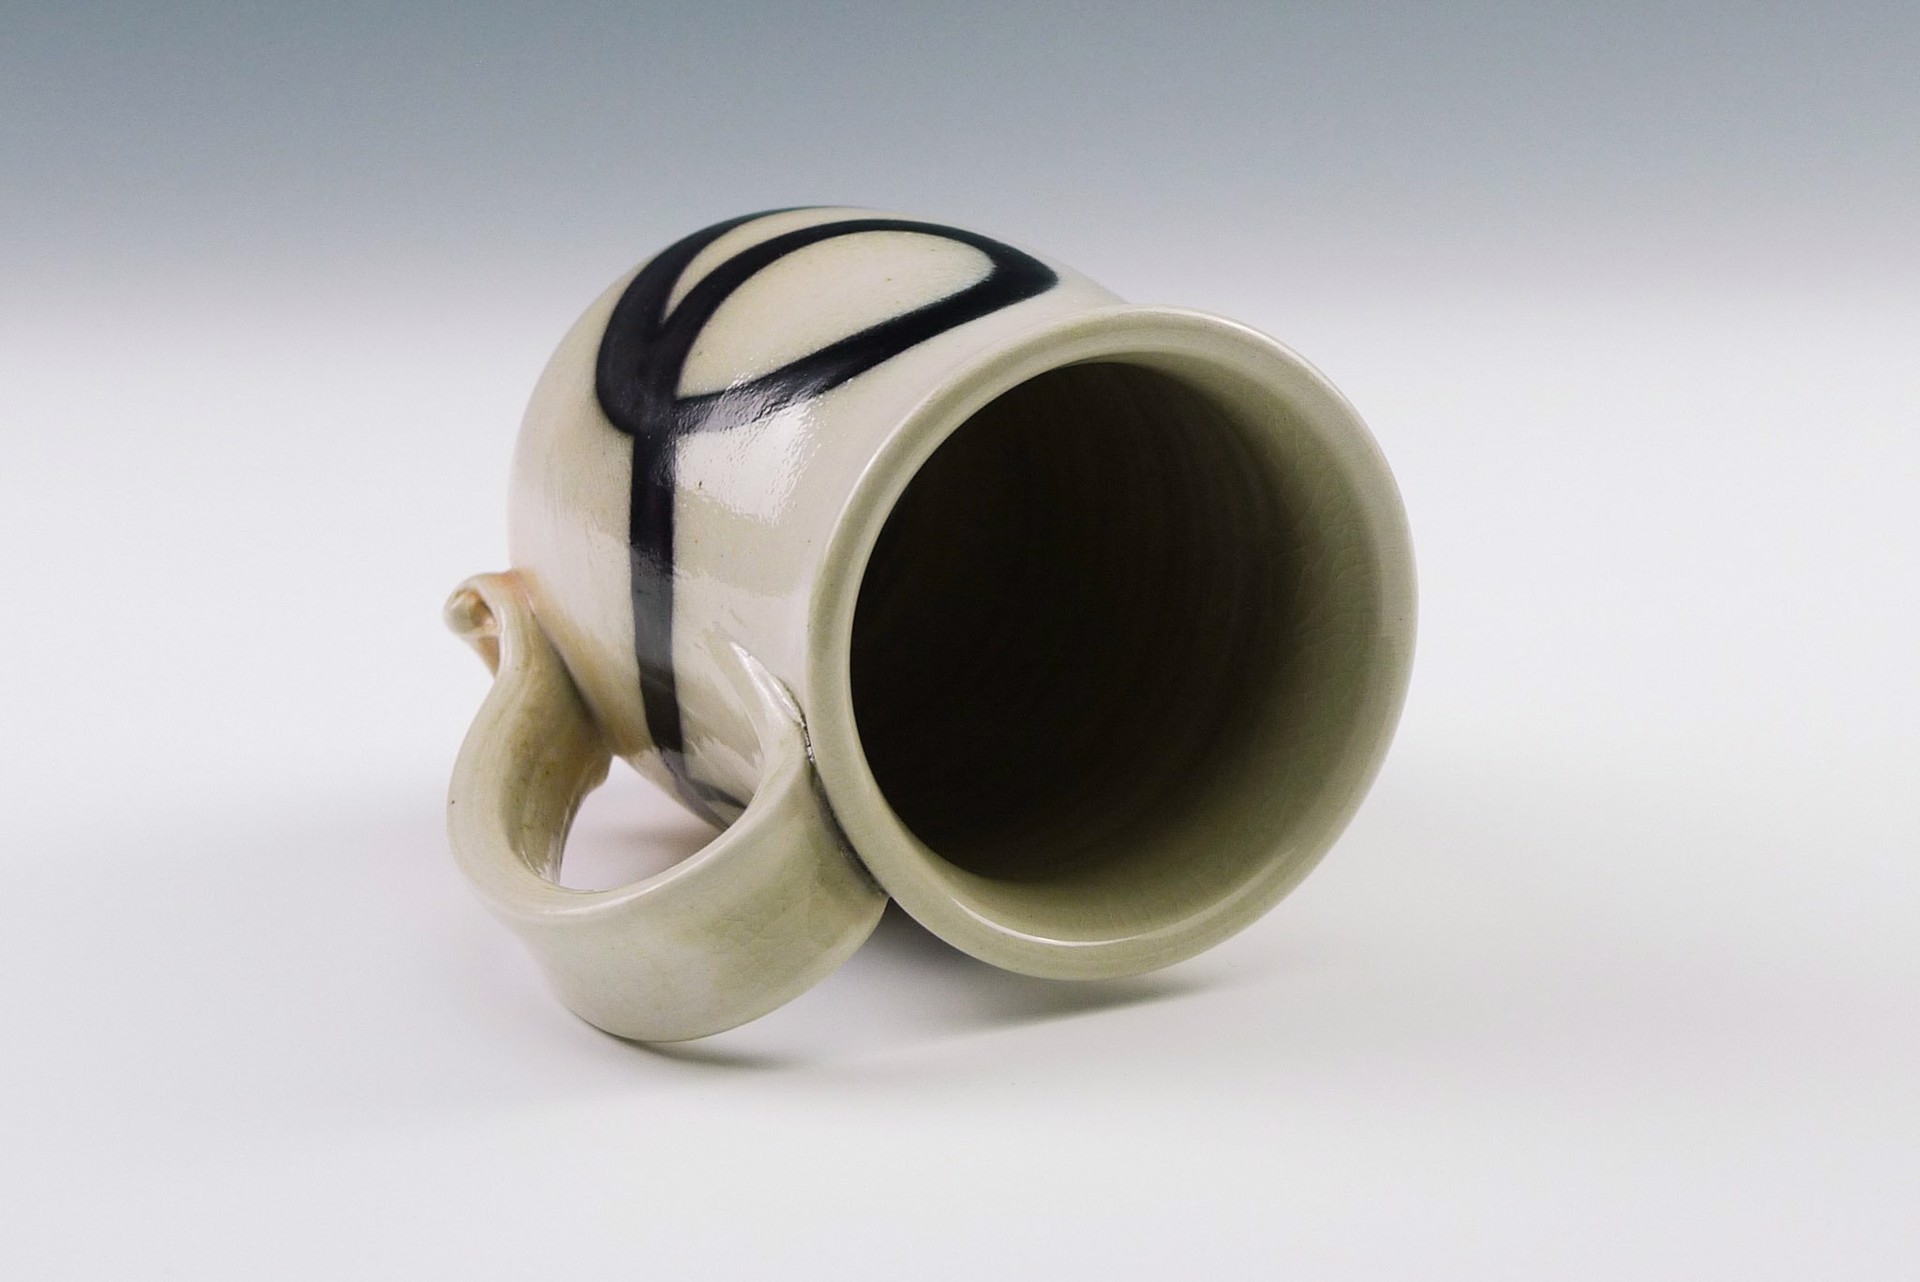 Mug by Joanne Kirkland